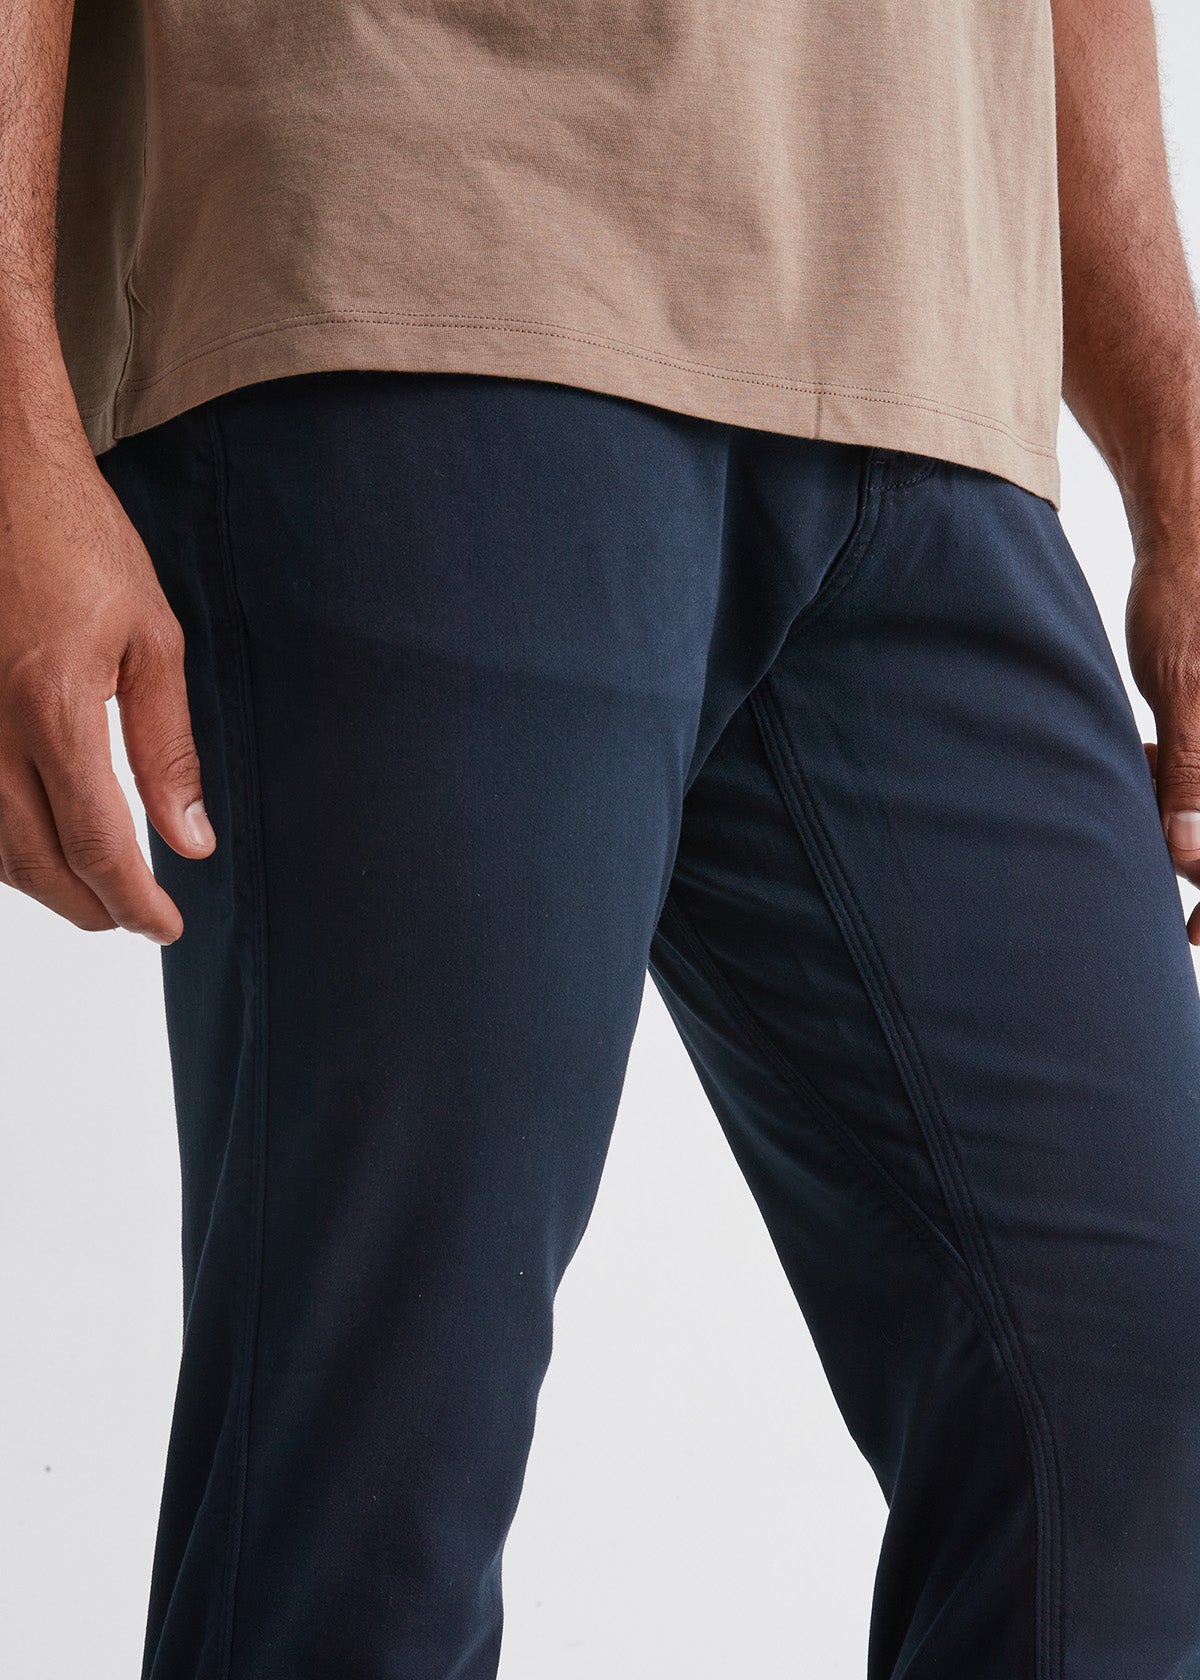 Style 35Z - Mid Calf Body Garment Side Zippers Open Crotch